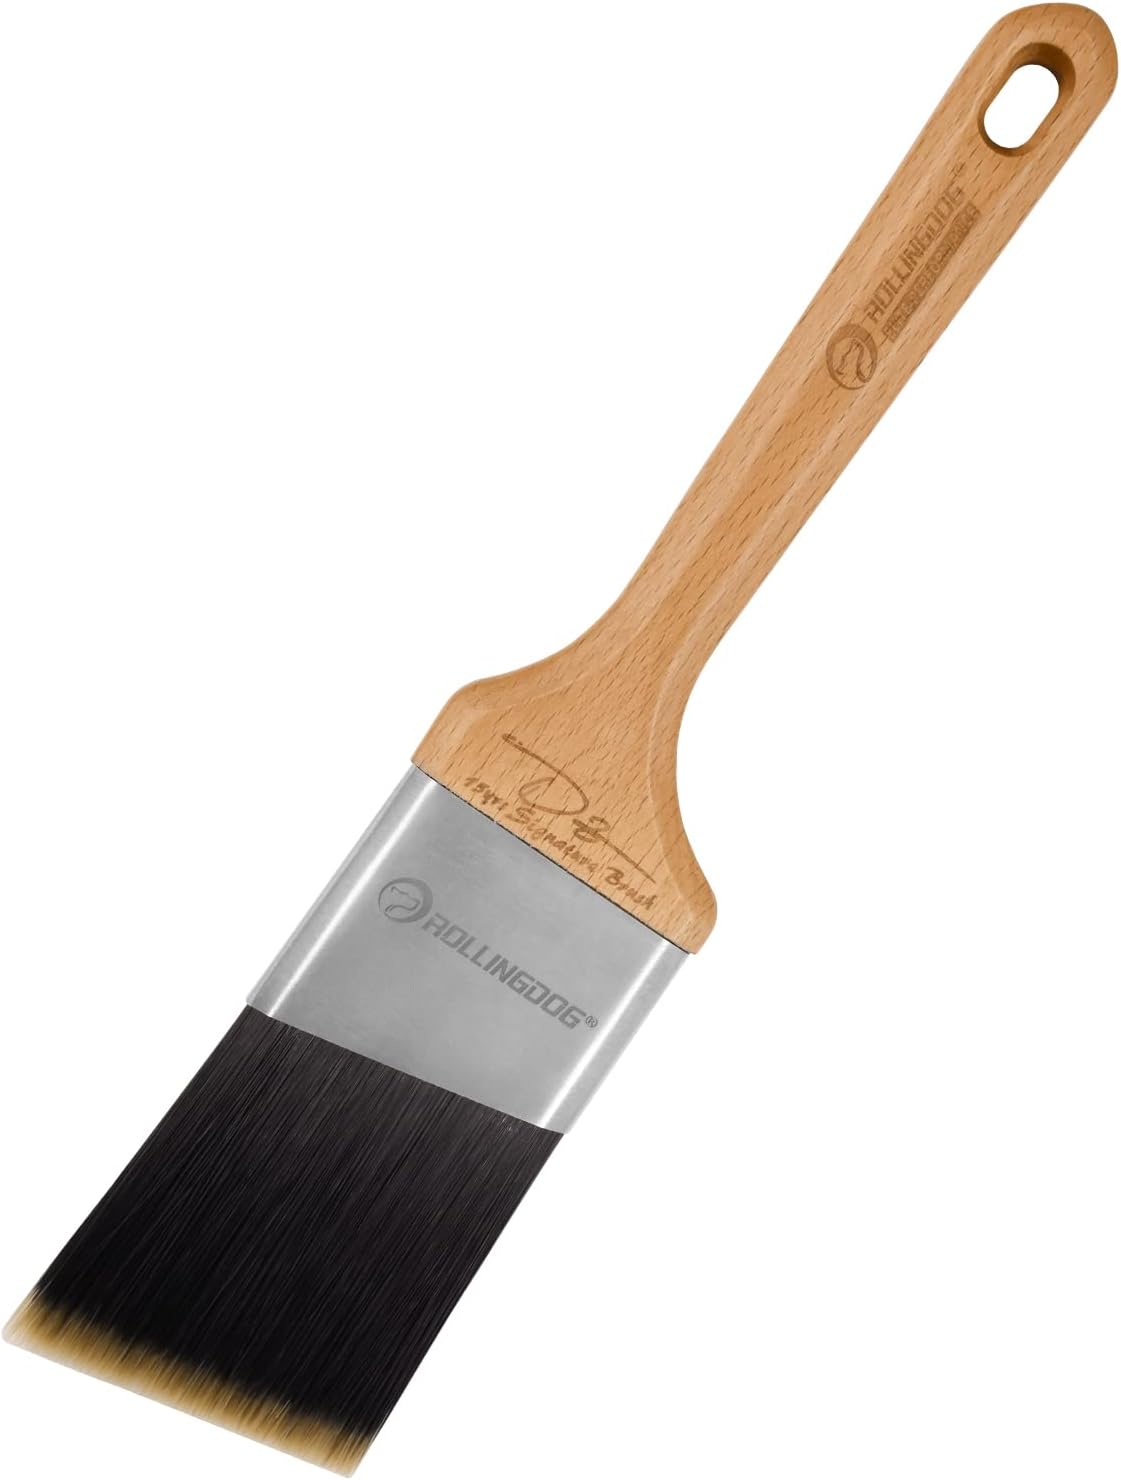 ROLLINGDOG Premium Paint Brush for Walls - 2.5 Inch [...]